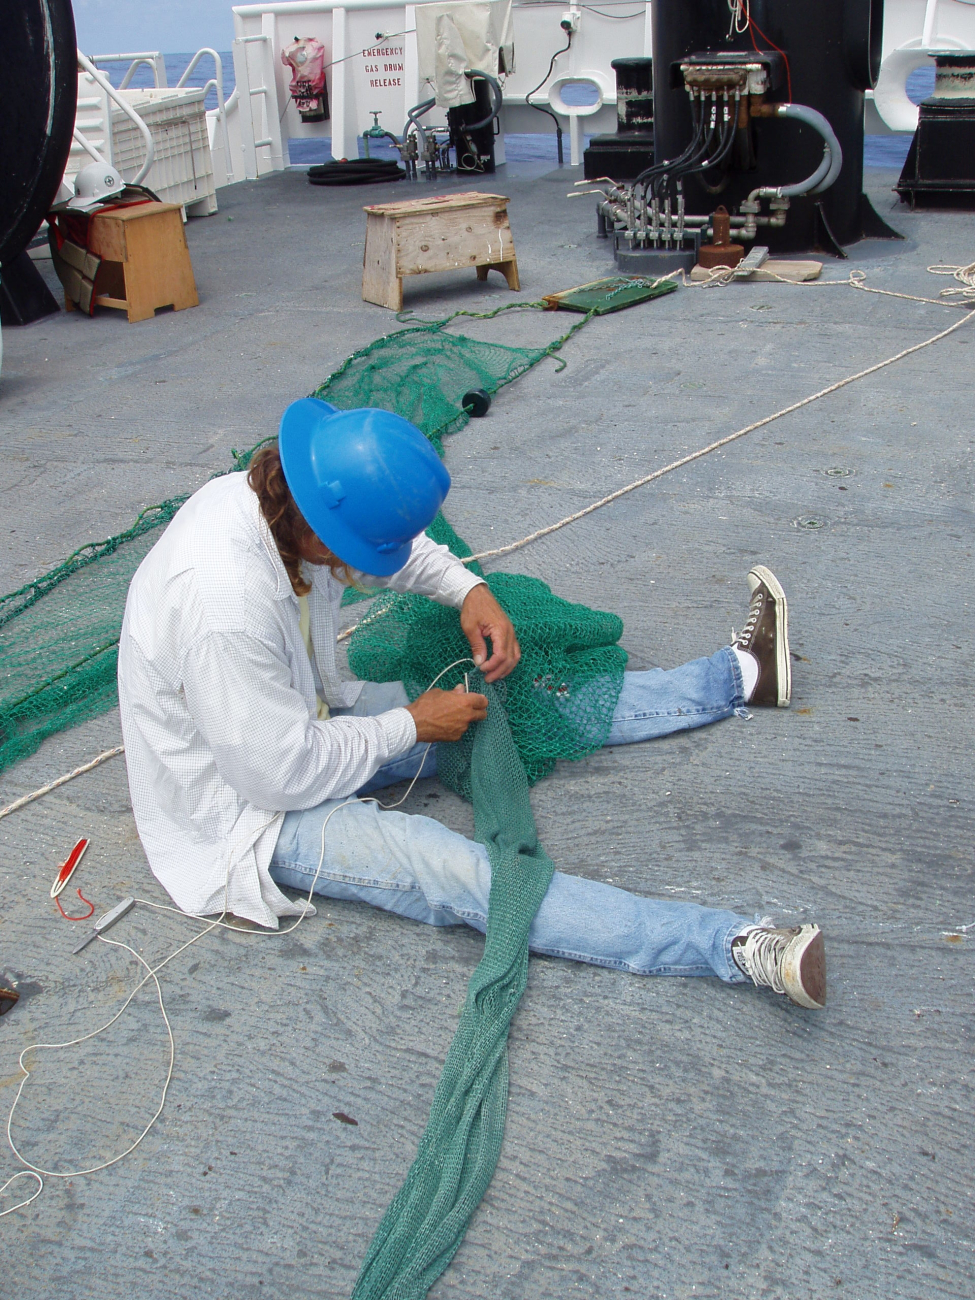 Lead Fisherman Jonathan Saunders sews in the liner of a sampling trawl net